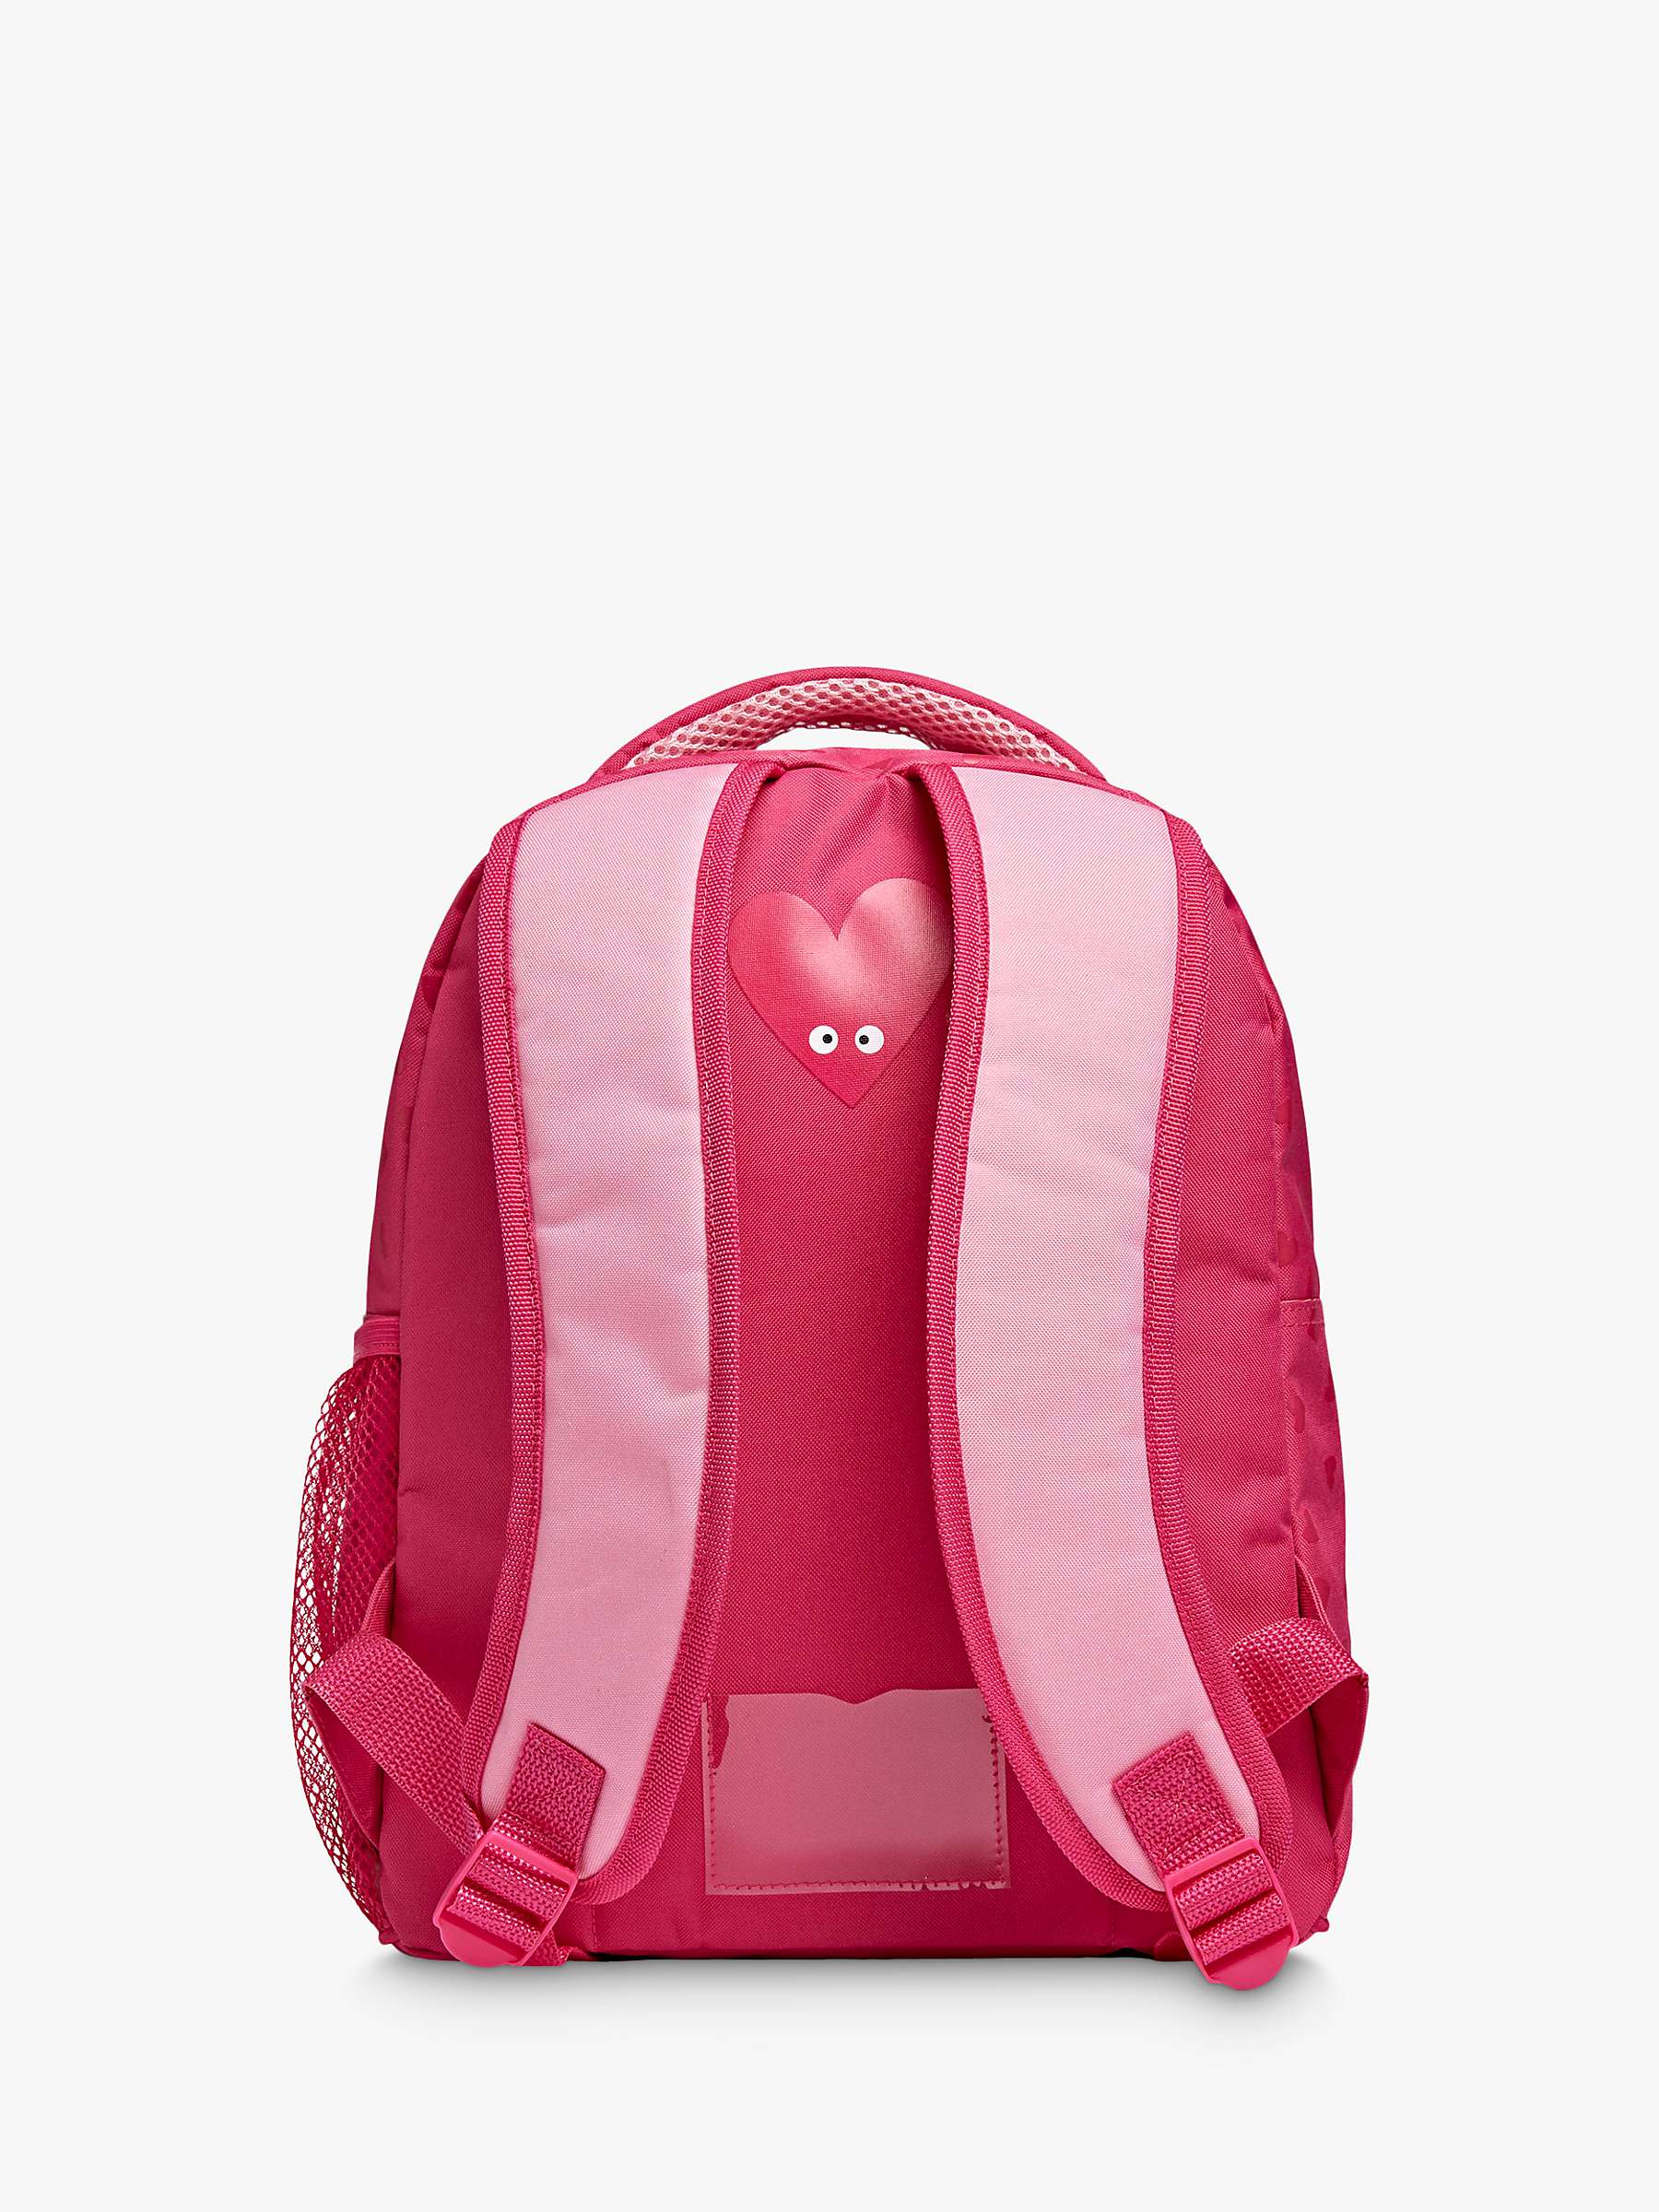 Buy Tinc Mallo Rainbow Children's Backpack Online at johnlewis.com